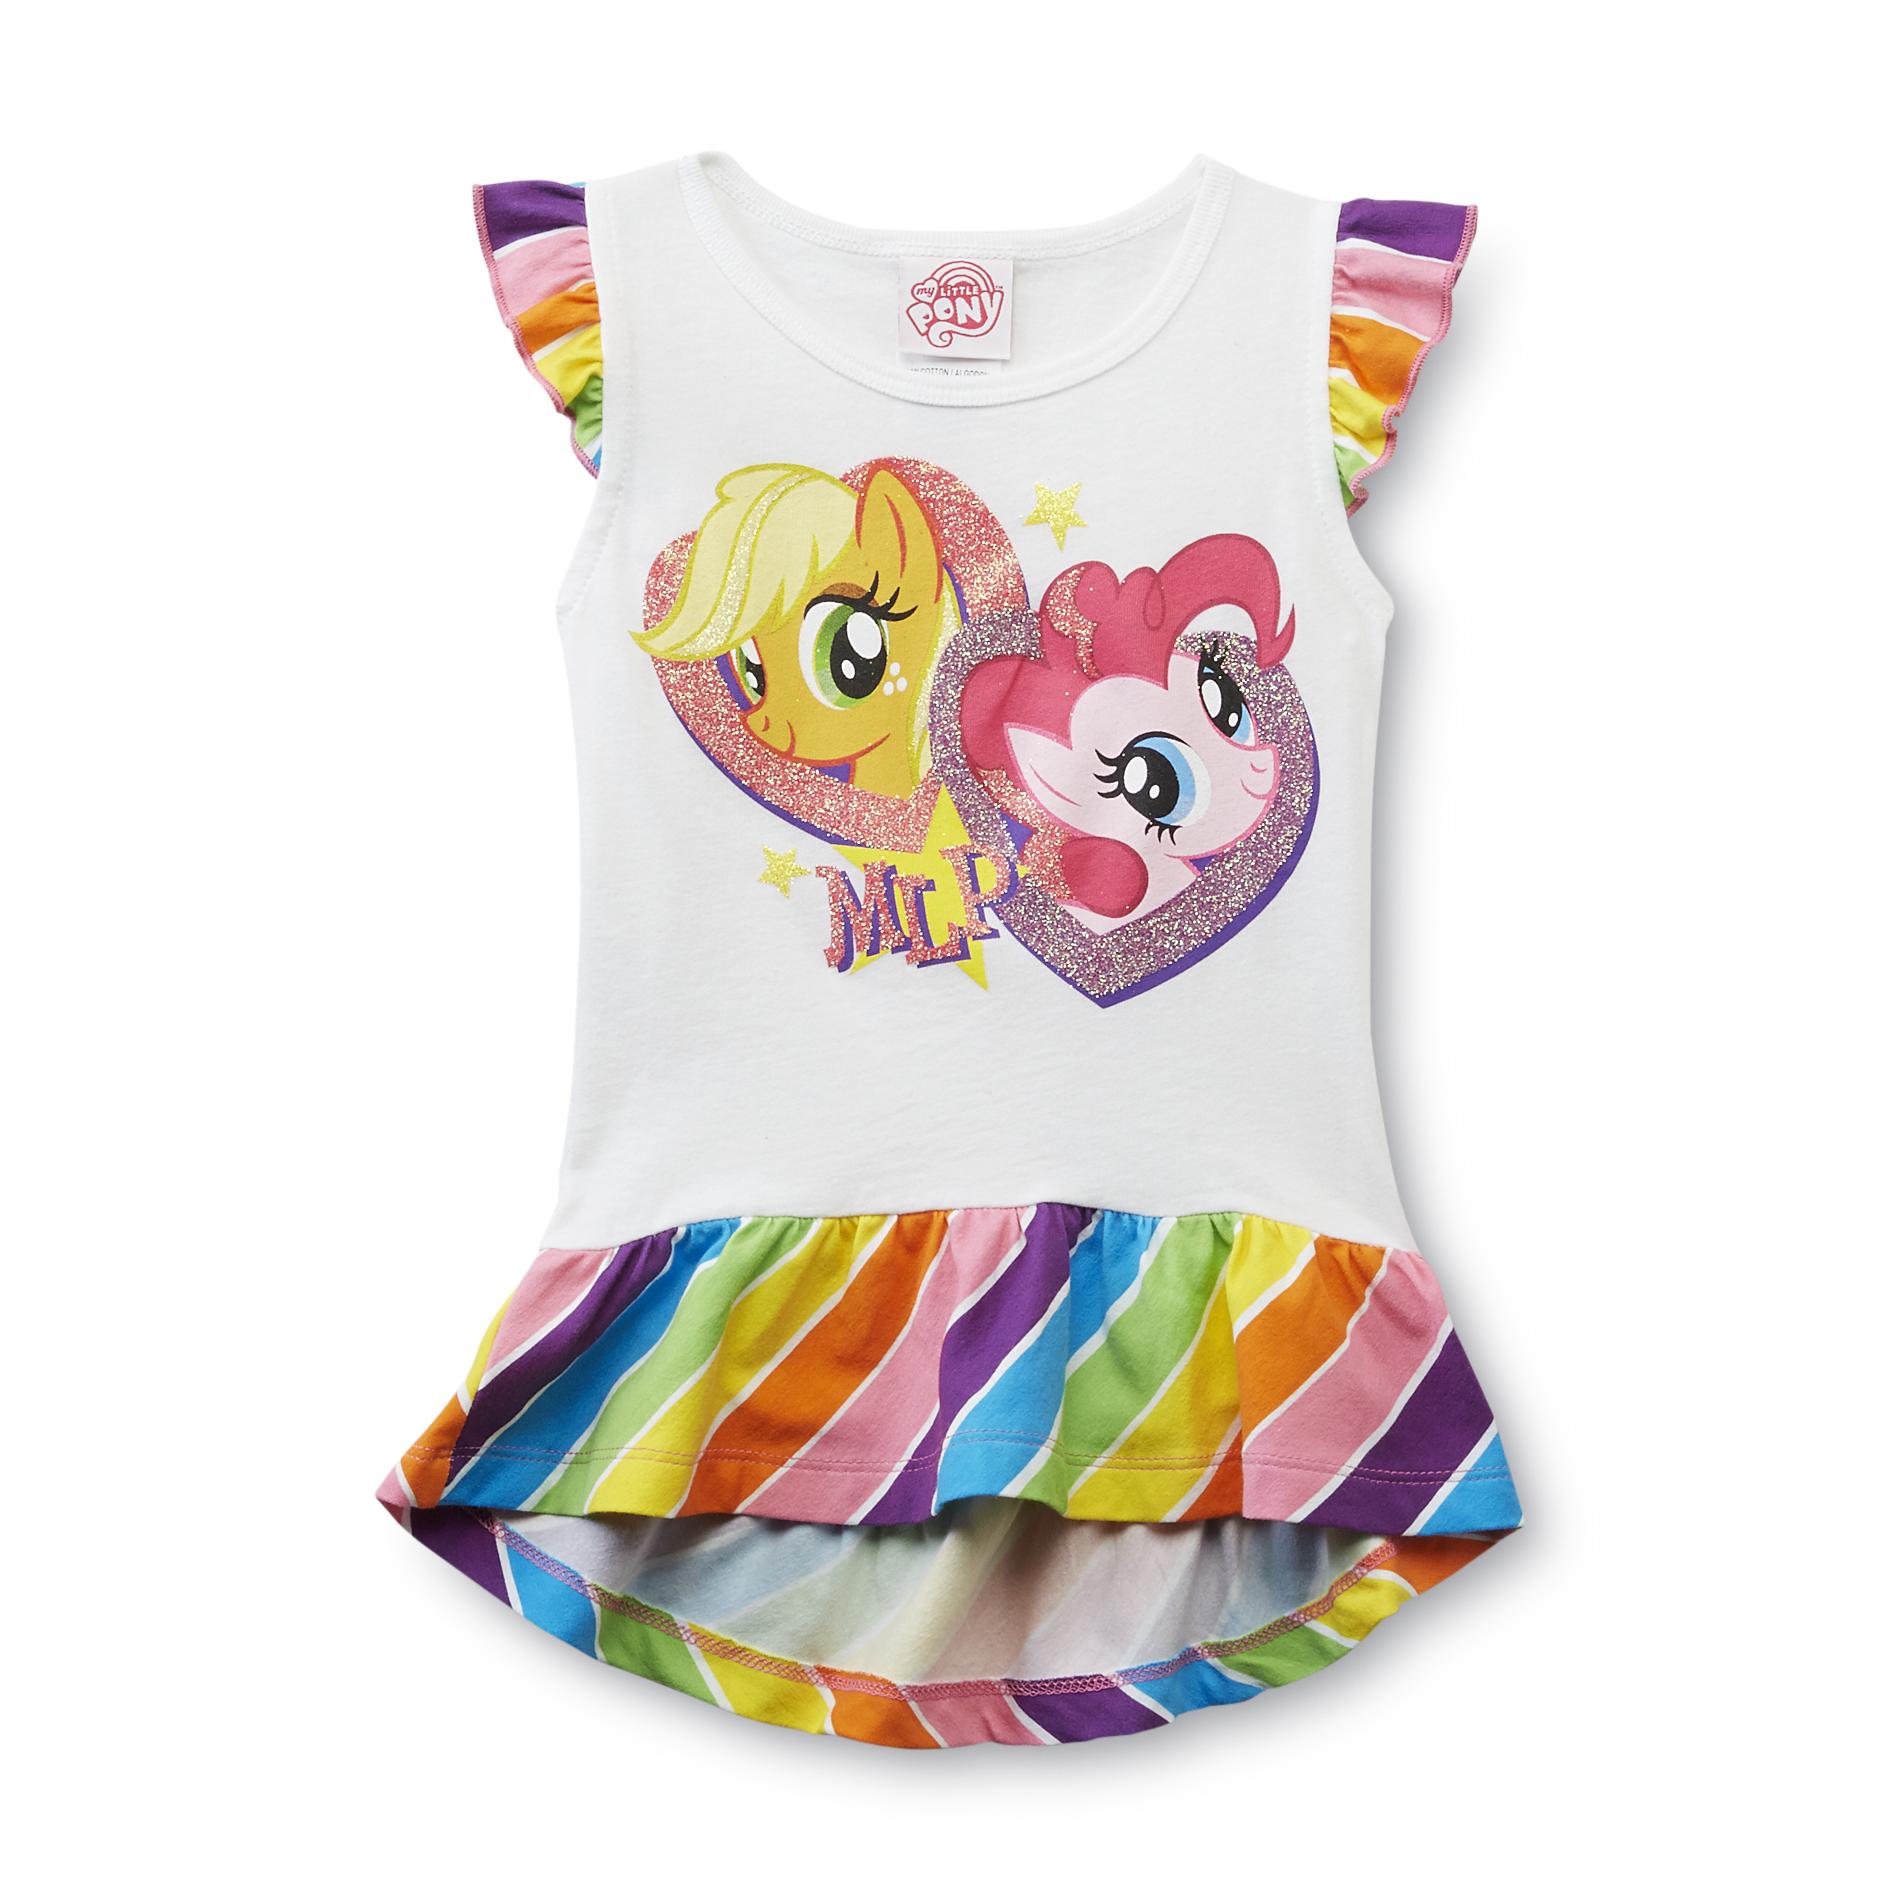 My Little Pony Girl's Embellished Tunic Top - Applejack & Pinkie Pie